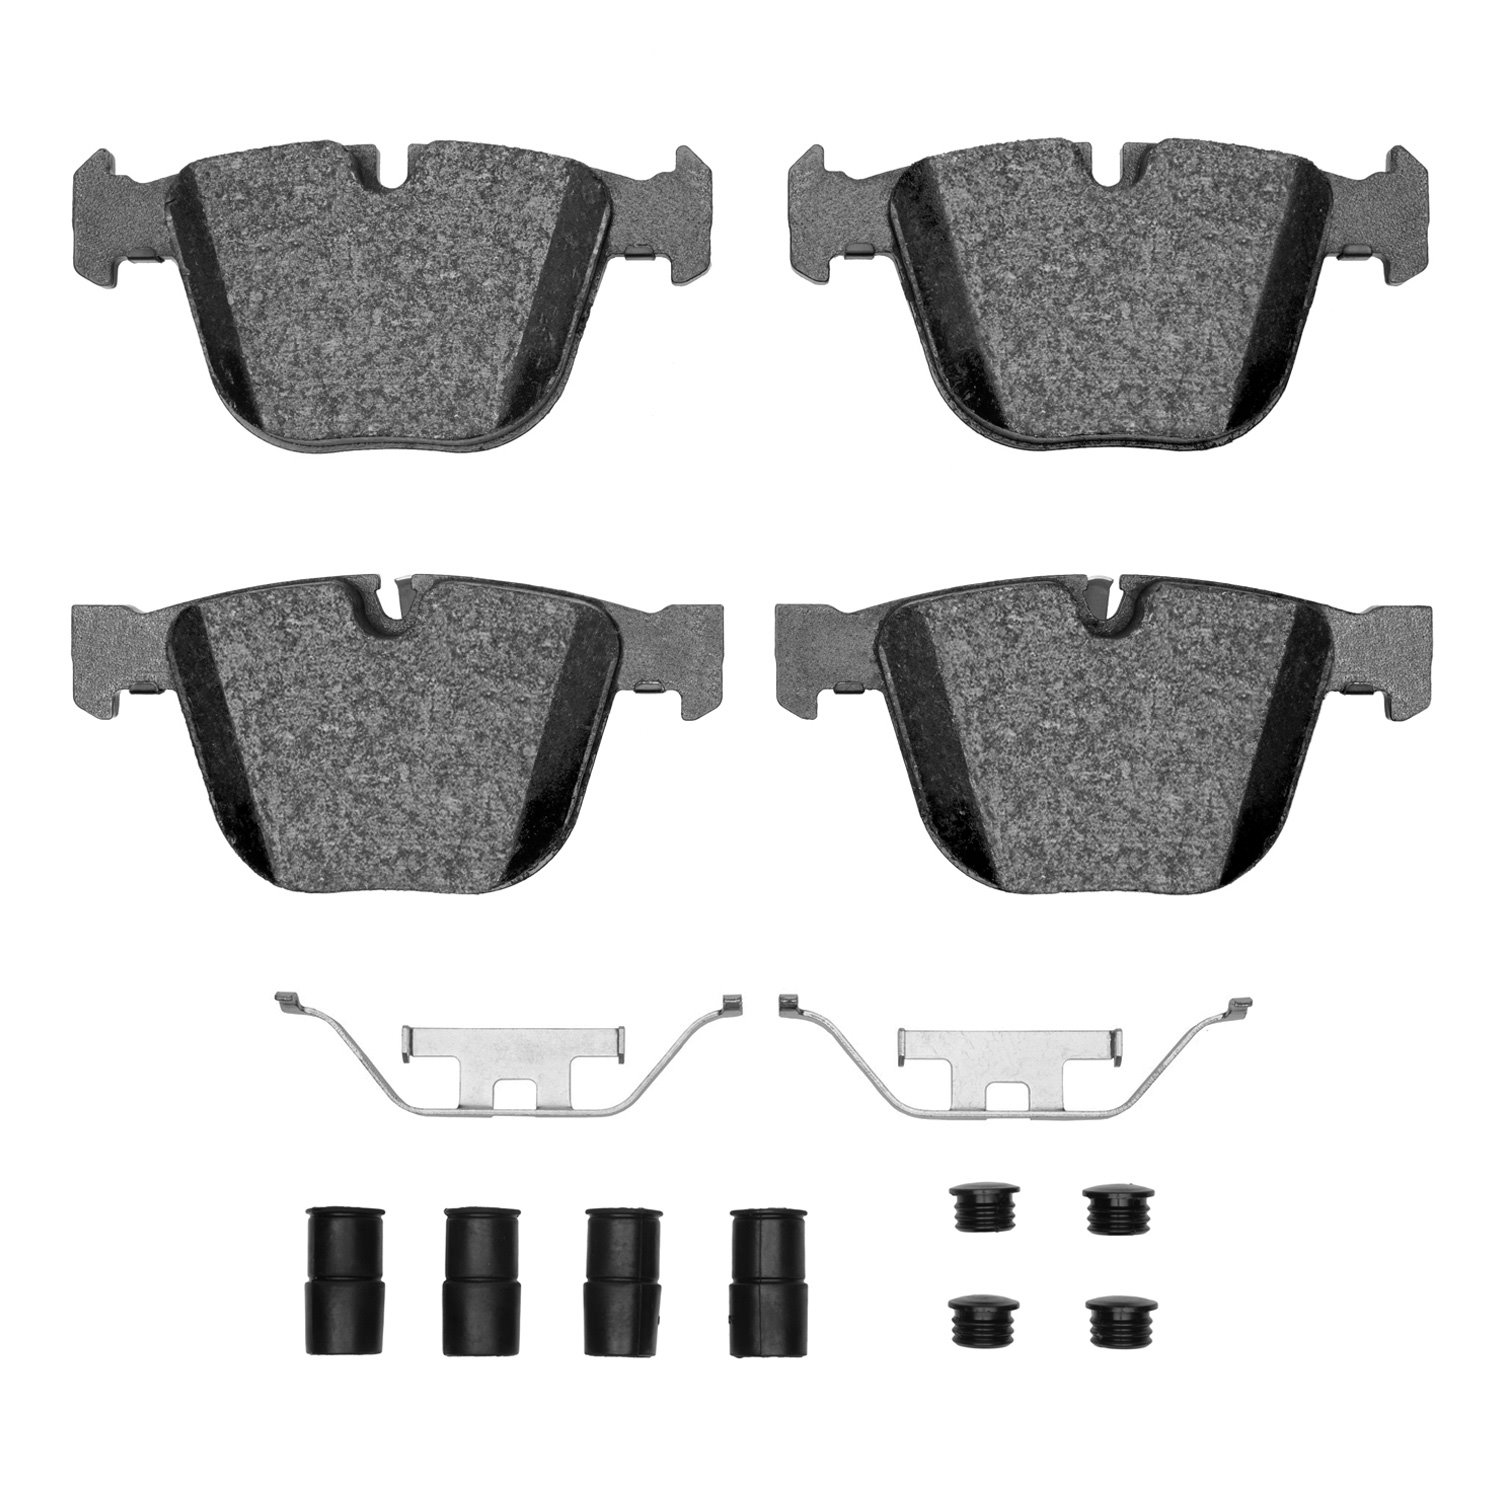 1551-0919-11 5000 Advanced Low-Metallic Brake Pads & Hardware Kit, 2009-2015 BMW, Position: Rear